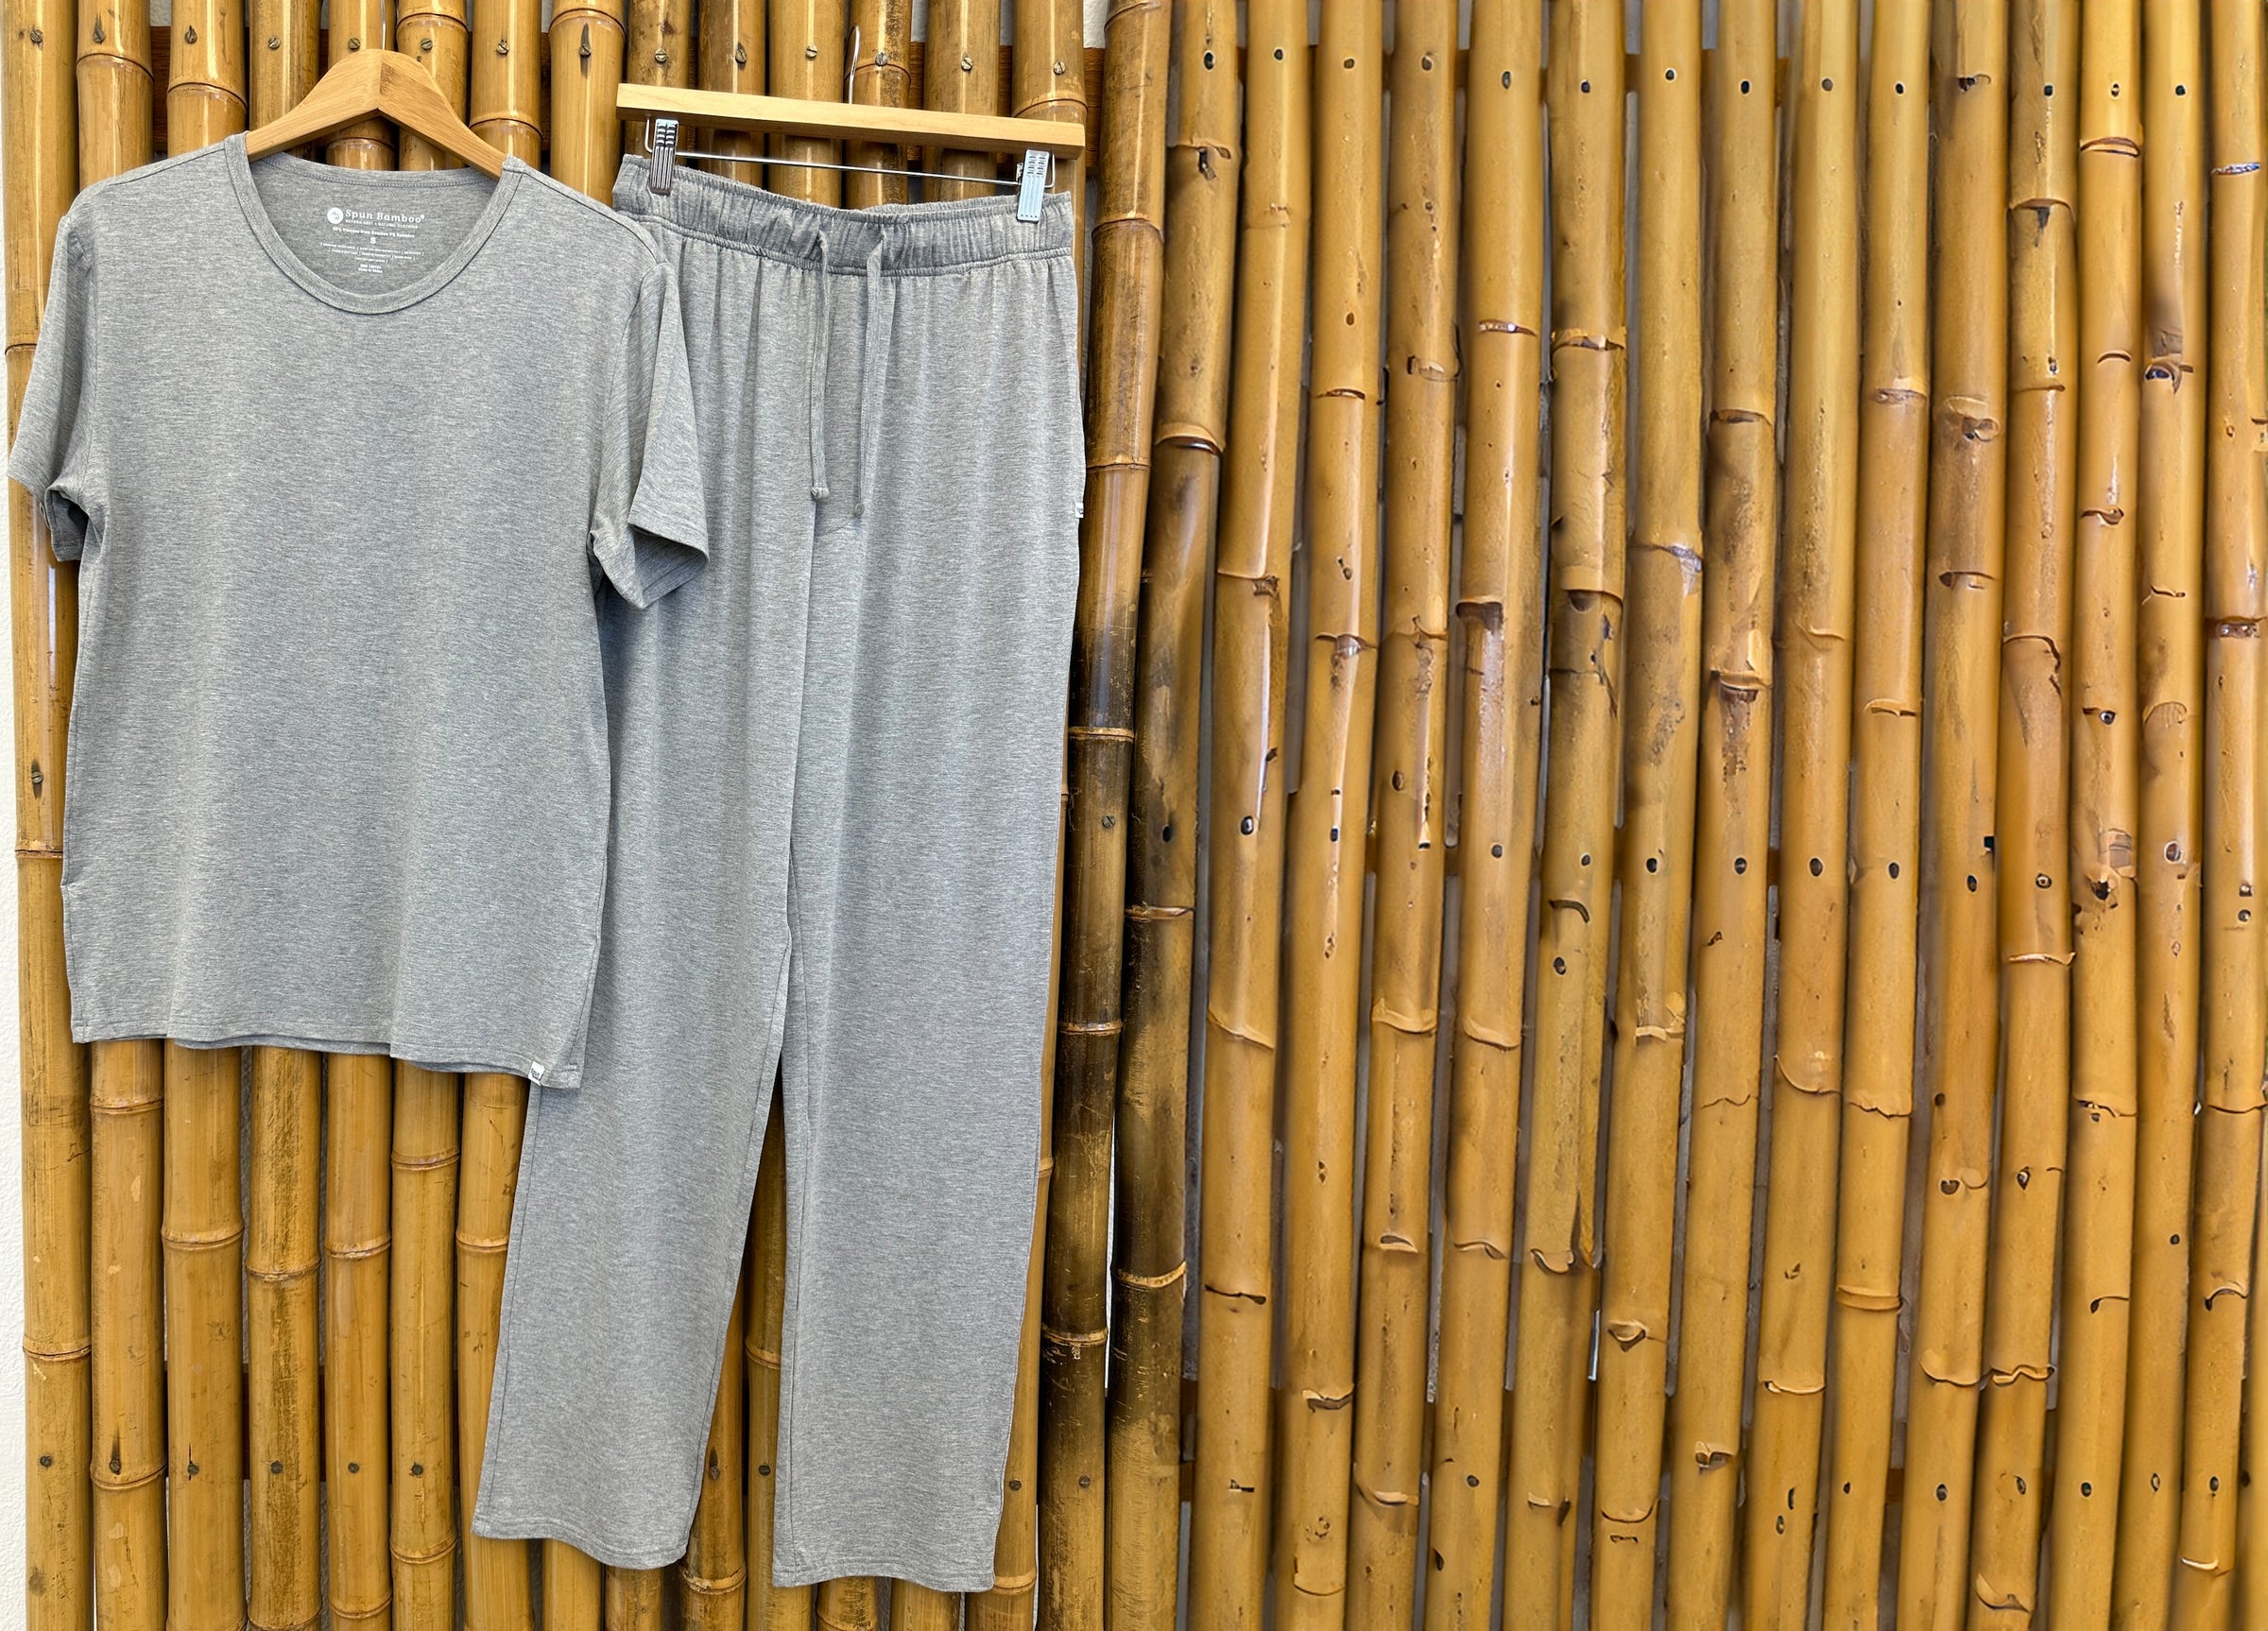 Spun Bamboo Clothing - Original Bamboo T-Shirts, Socks, Underwear